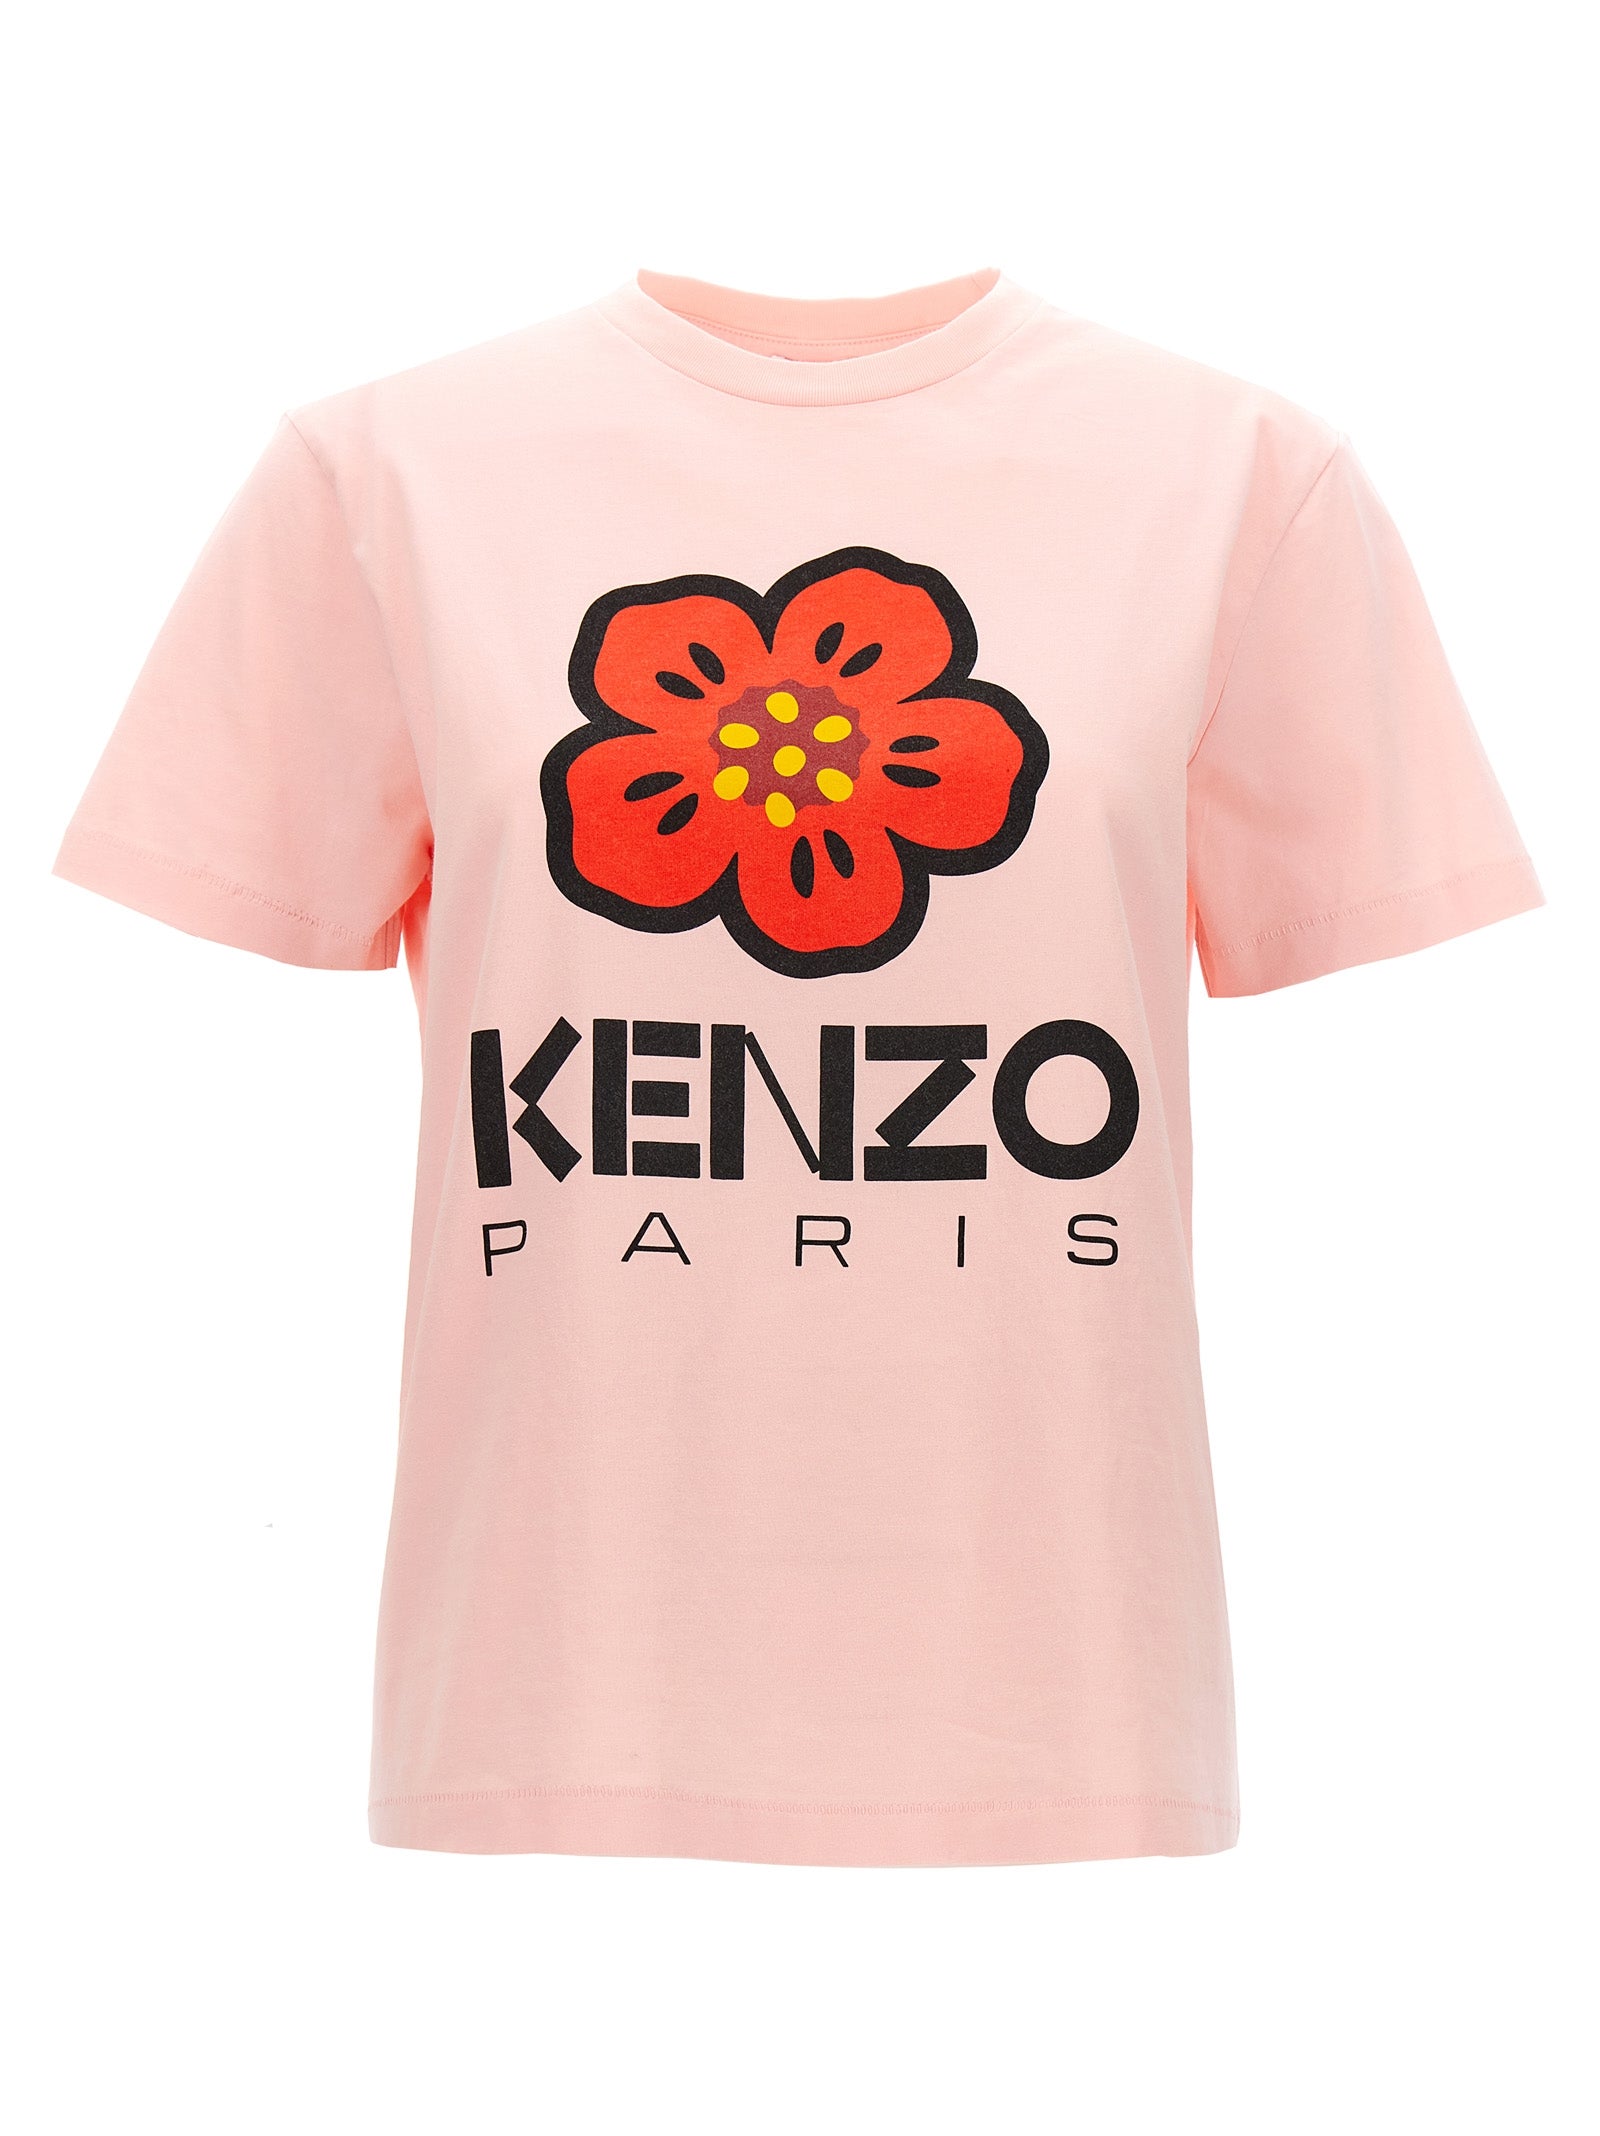 Kenzo-Kenzo Paris T Shirt Rosa-Donna